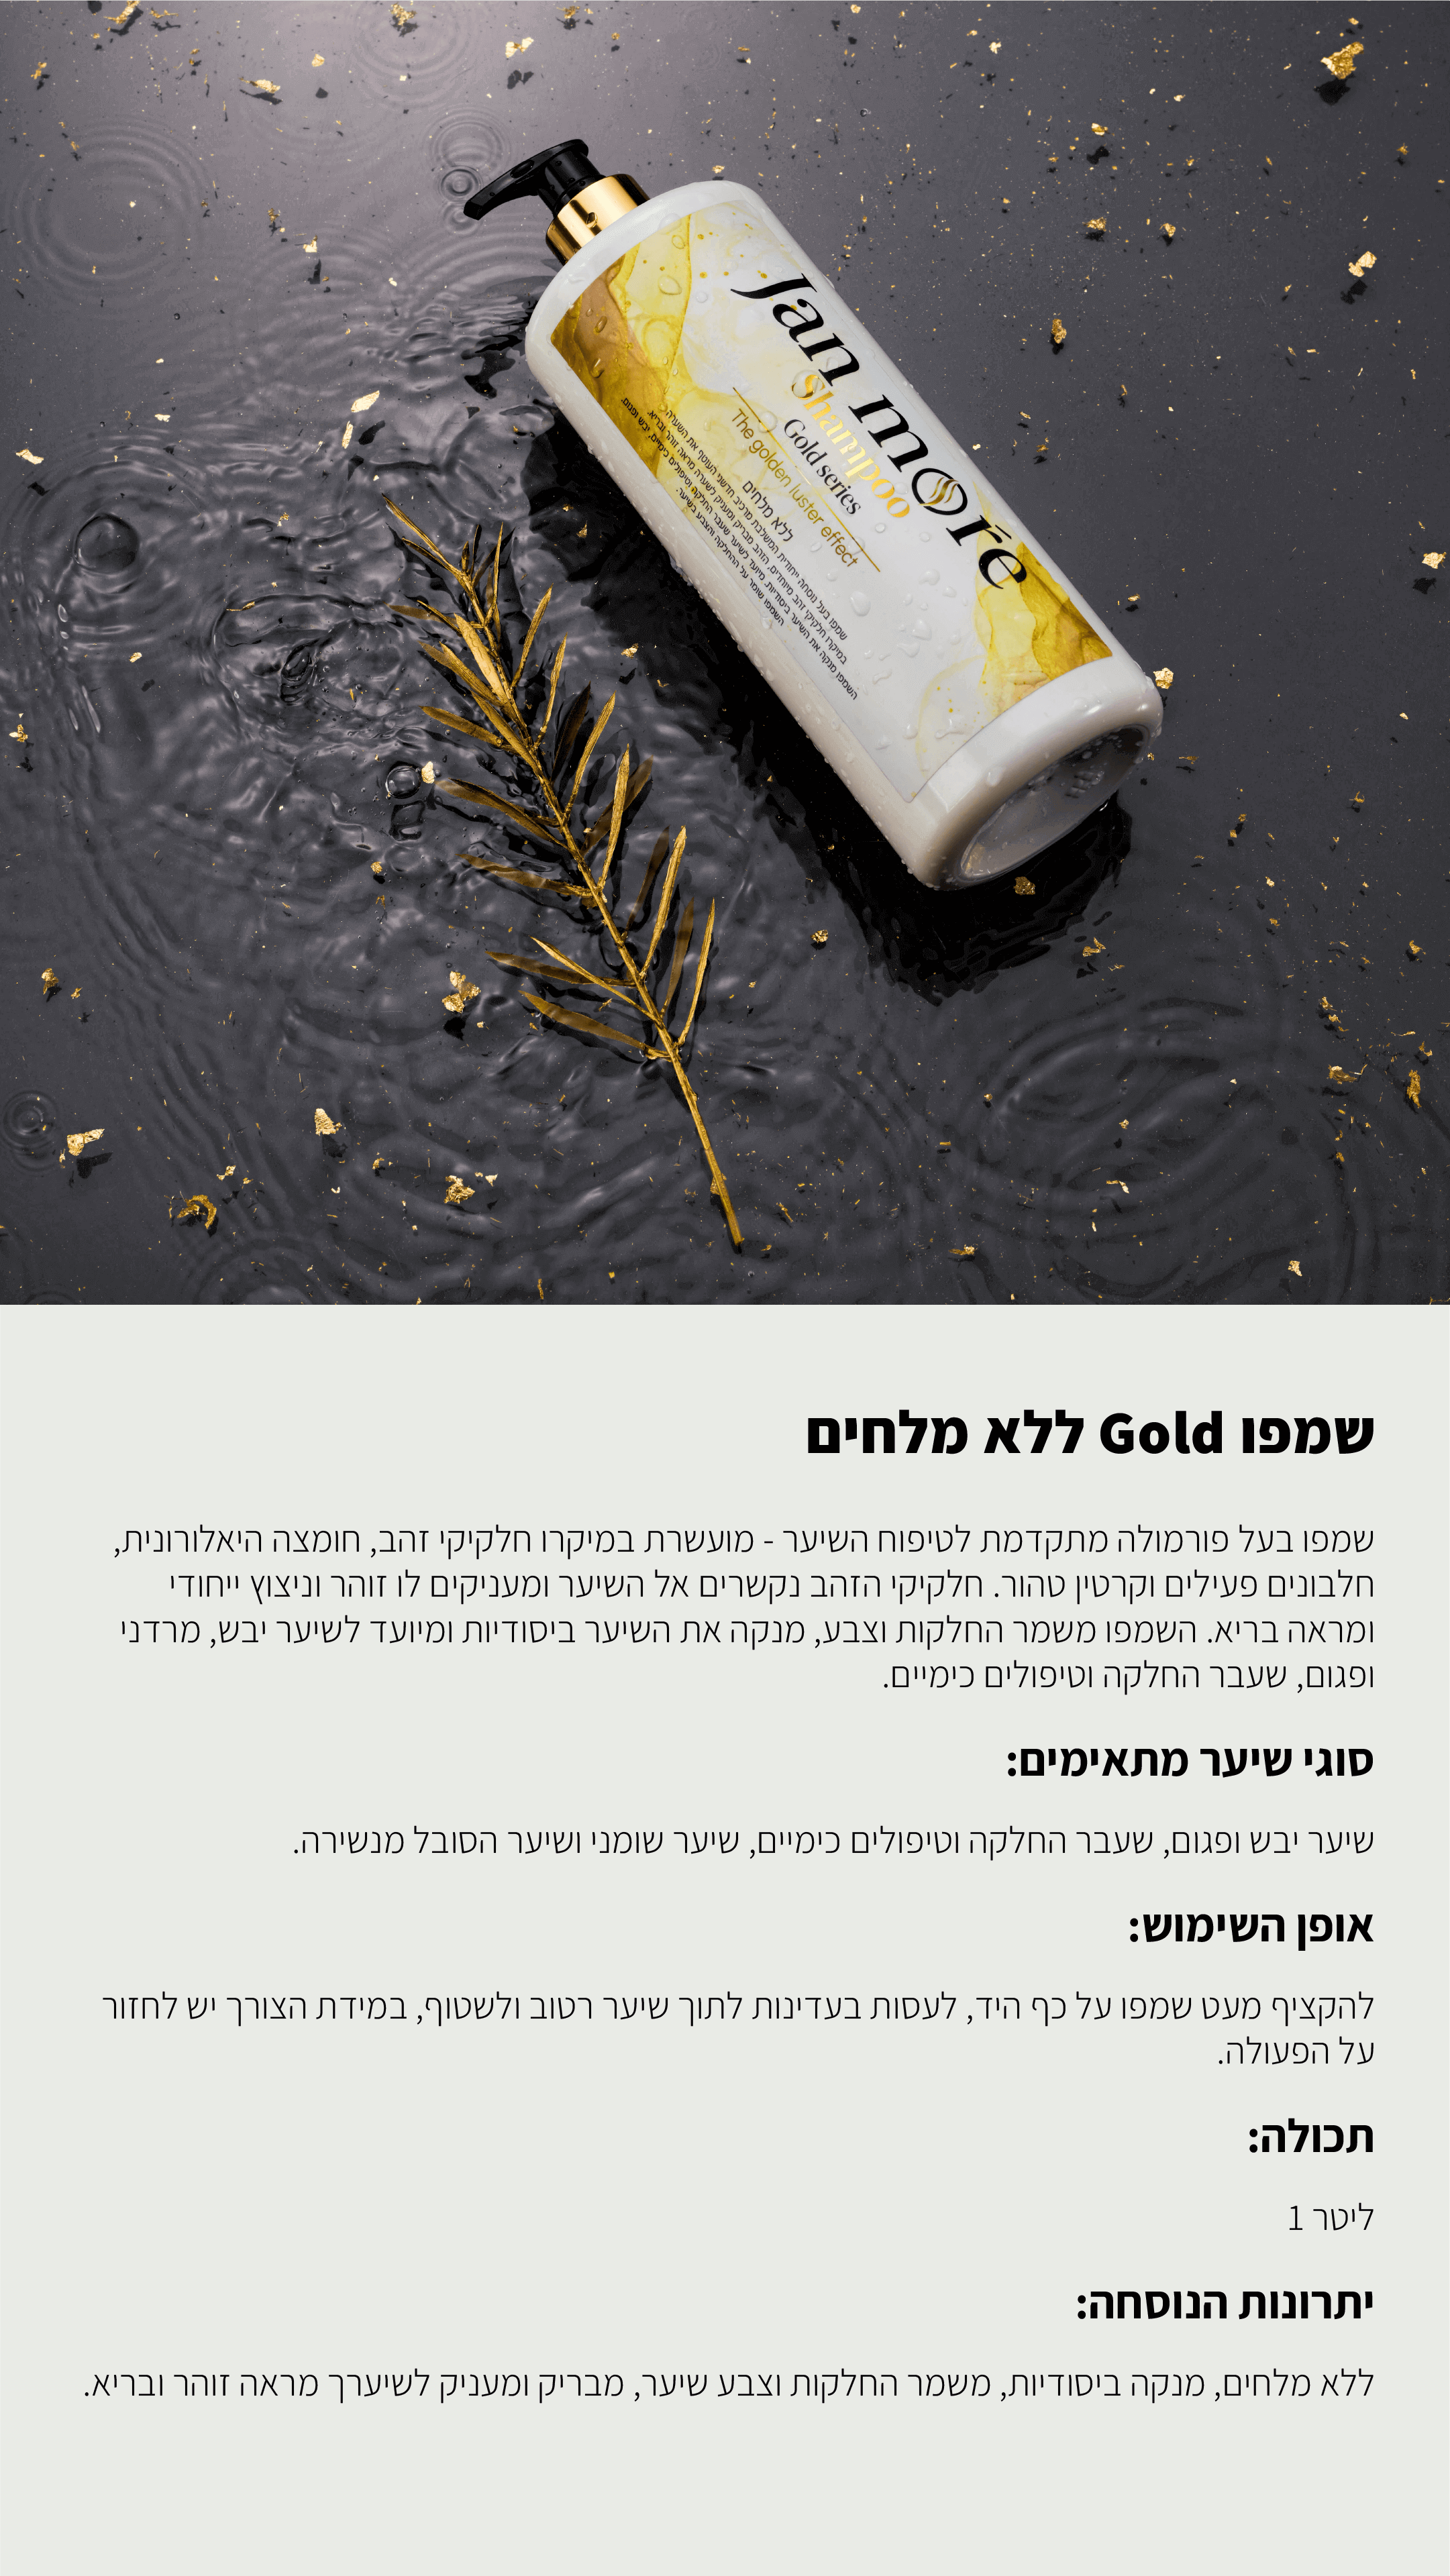 Gold shampoo detail phone